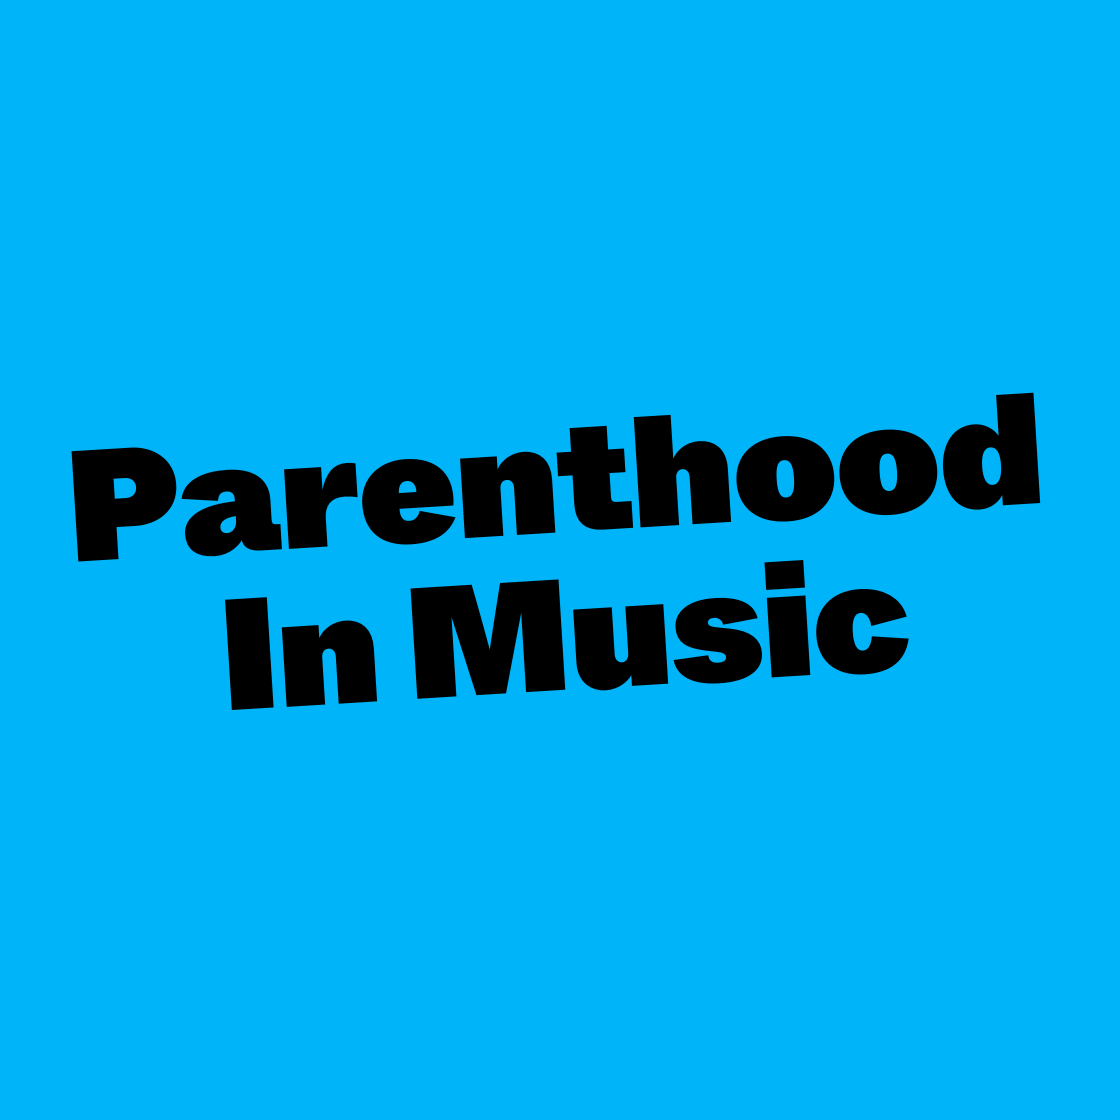 Parenthood in Music